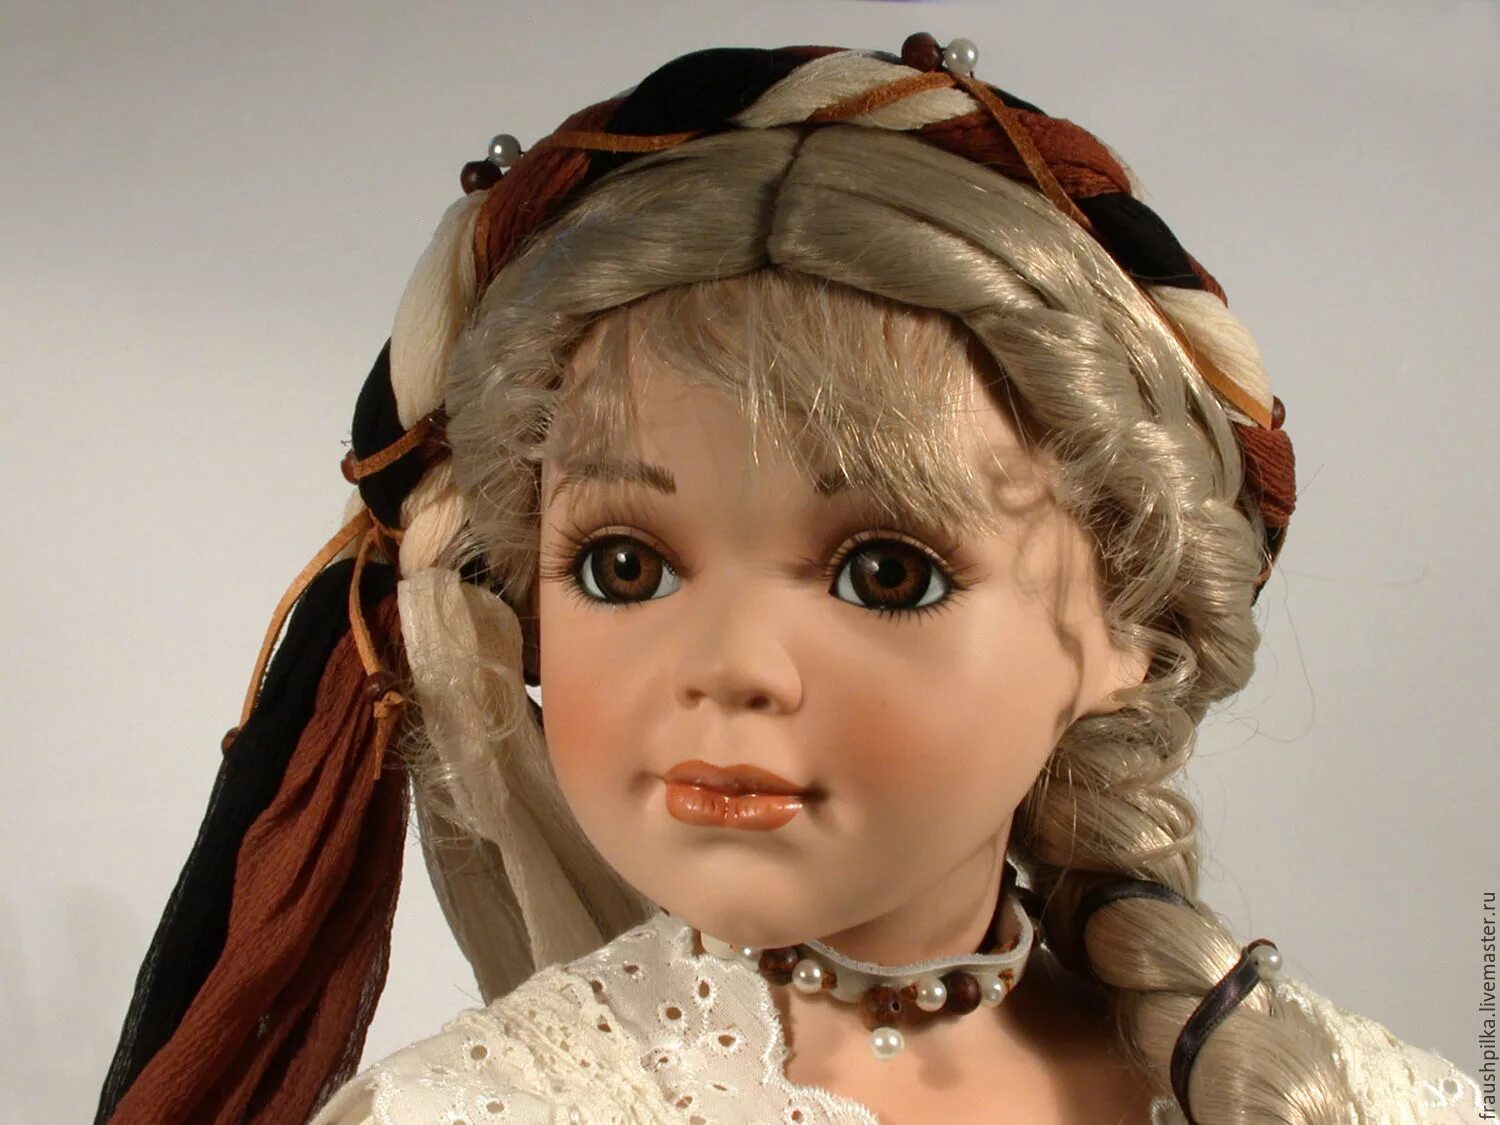 Куплю коллекцию кукол. Кукла фарфоровая. Немецкие фарфоровые куклы. Красивые фарфоровые куклы. Фарфоровые куклы коллекционные.